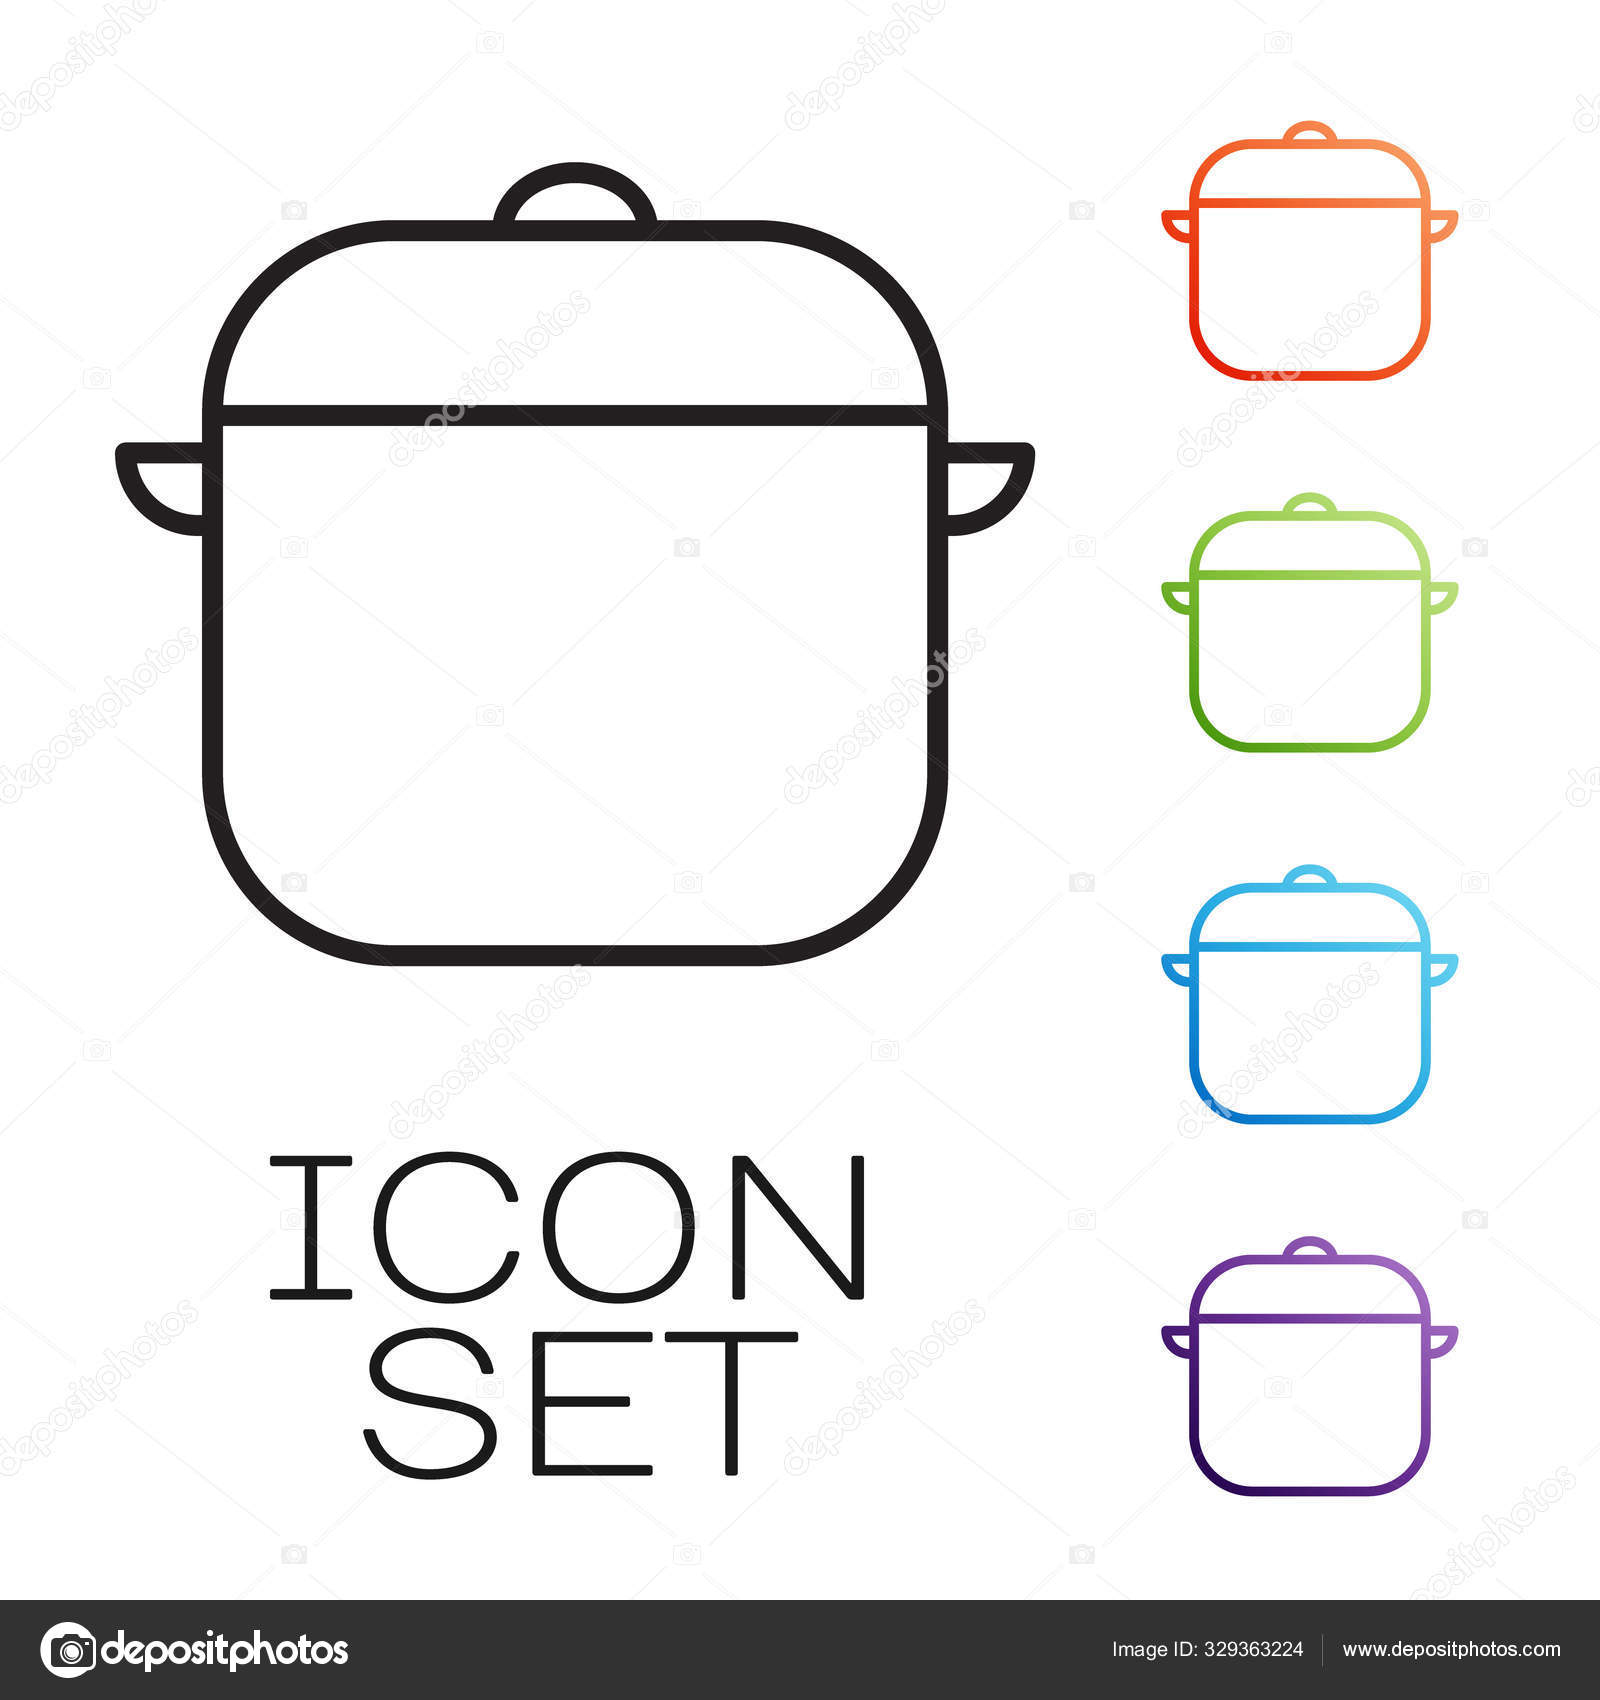 https://st3.depositphotos.com/26272052/32936/v/1600/depositphotos_329363224-stock-illustration-black-line-cooking-pot-icon.jpg